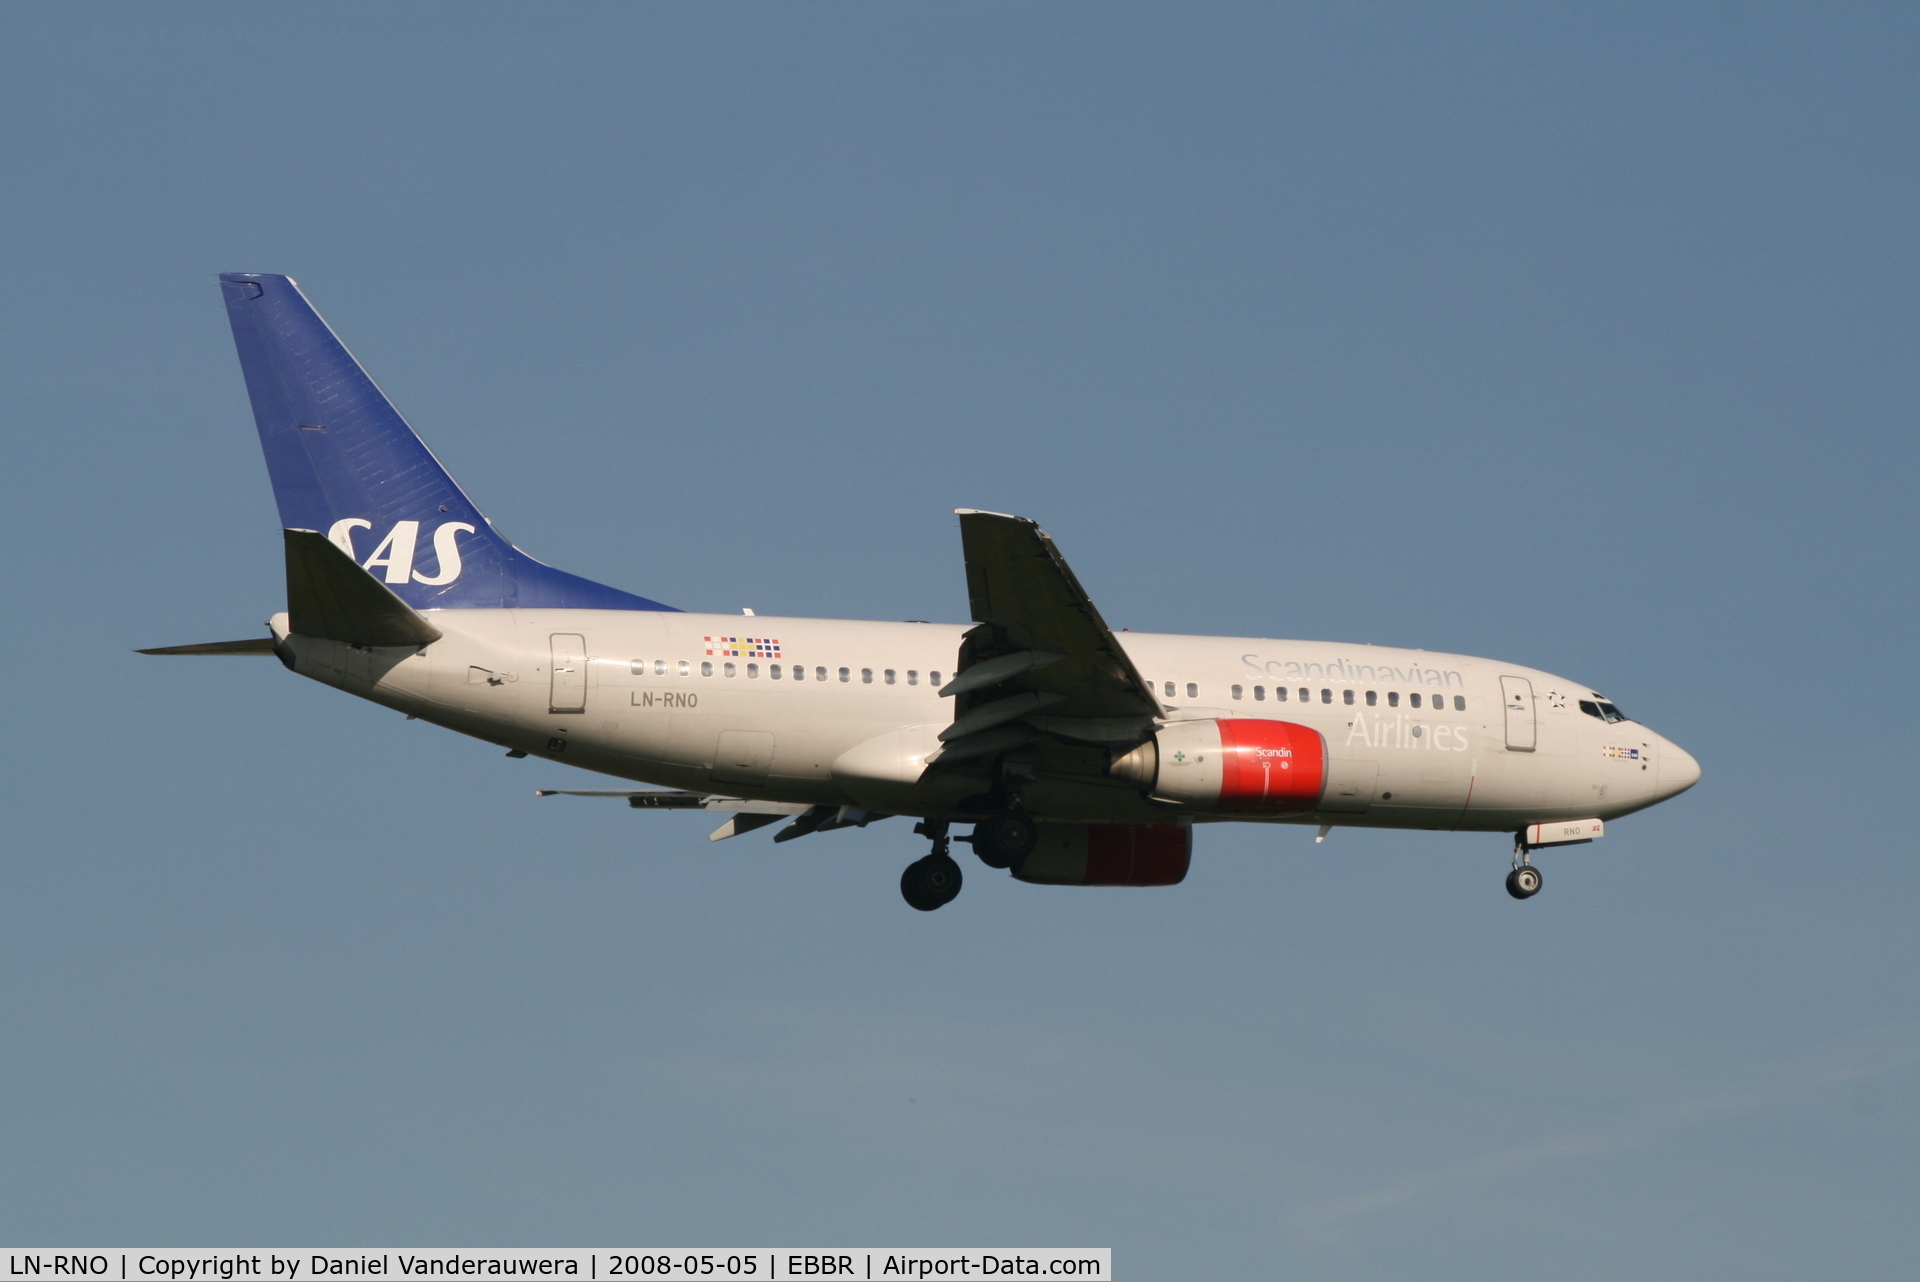 LN-RNO, 1999 Boeing 737-783 C/N 28316, arrival of flight SK4743 to rwy 02